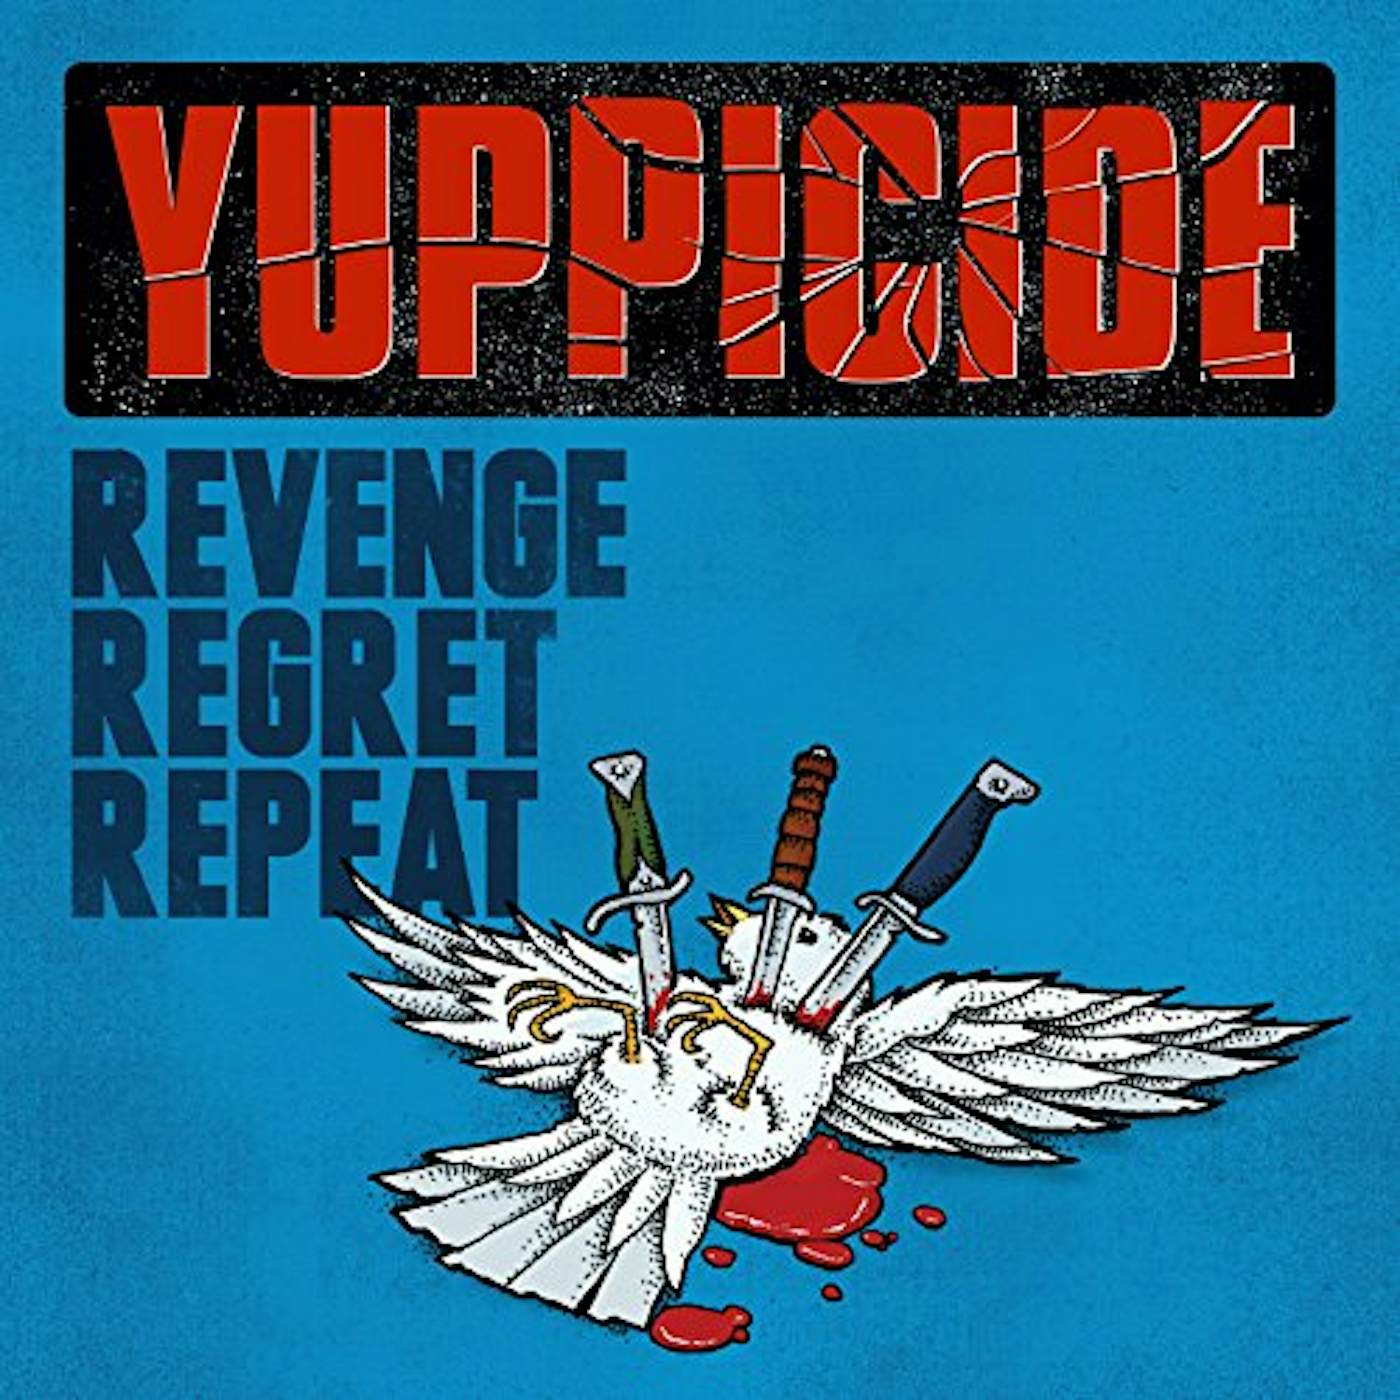 Yuppicide REVENGE REGRET REPEAT CD